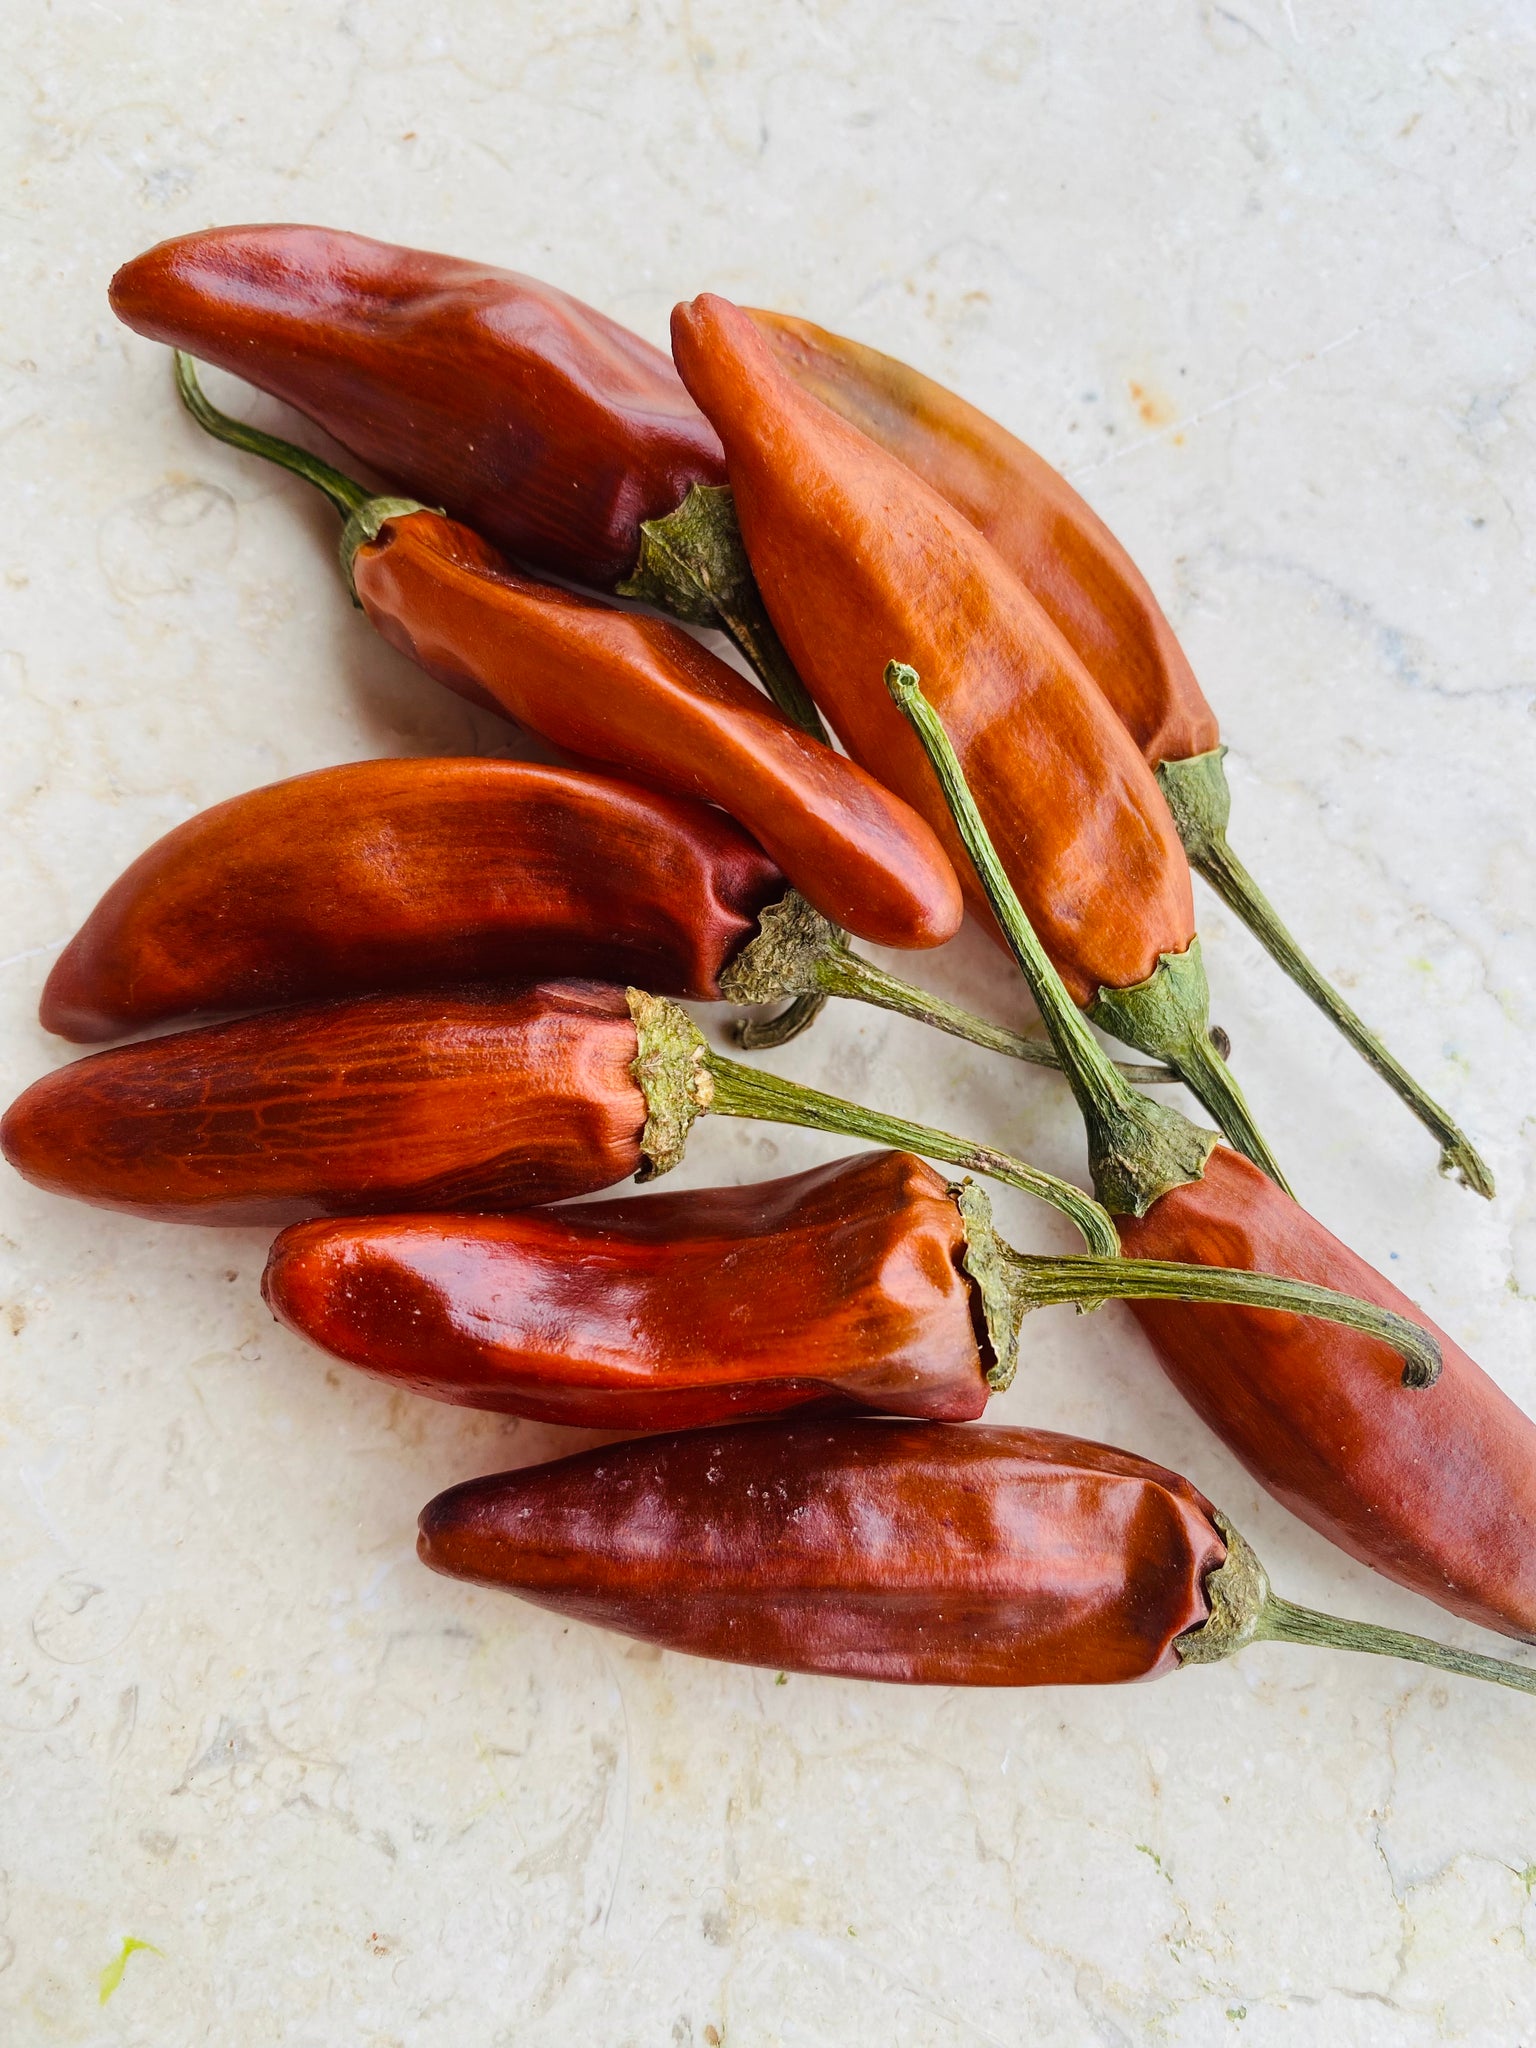 Orange Thai Chili Peppers | Botano's Biodynamic Cultivation